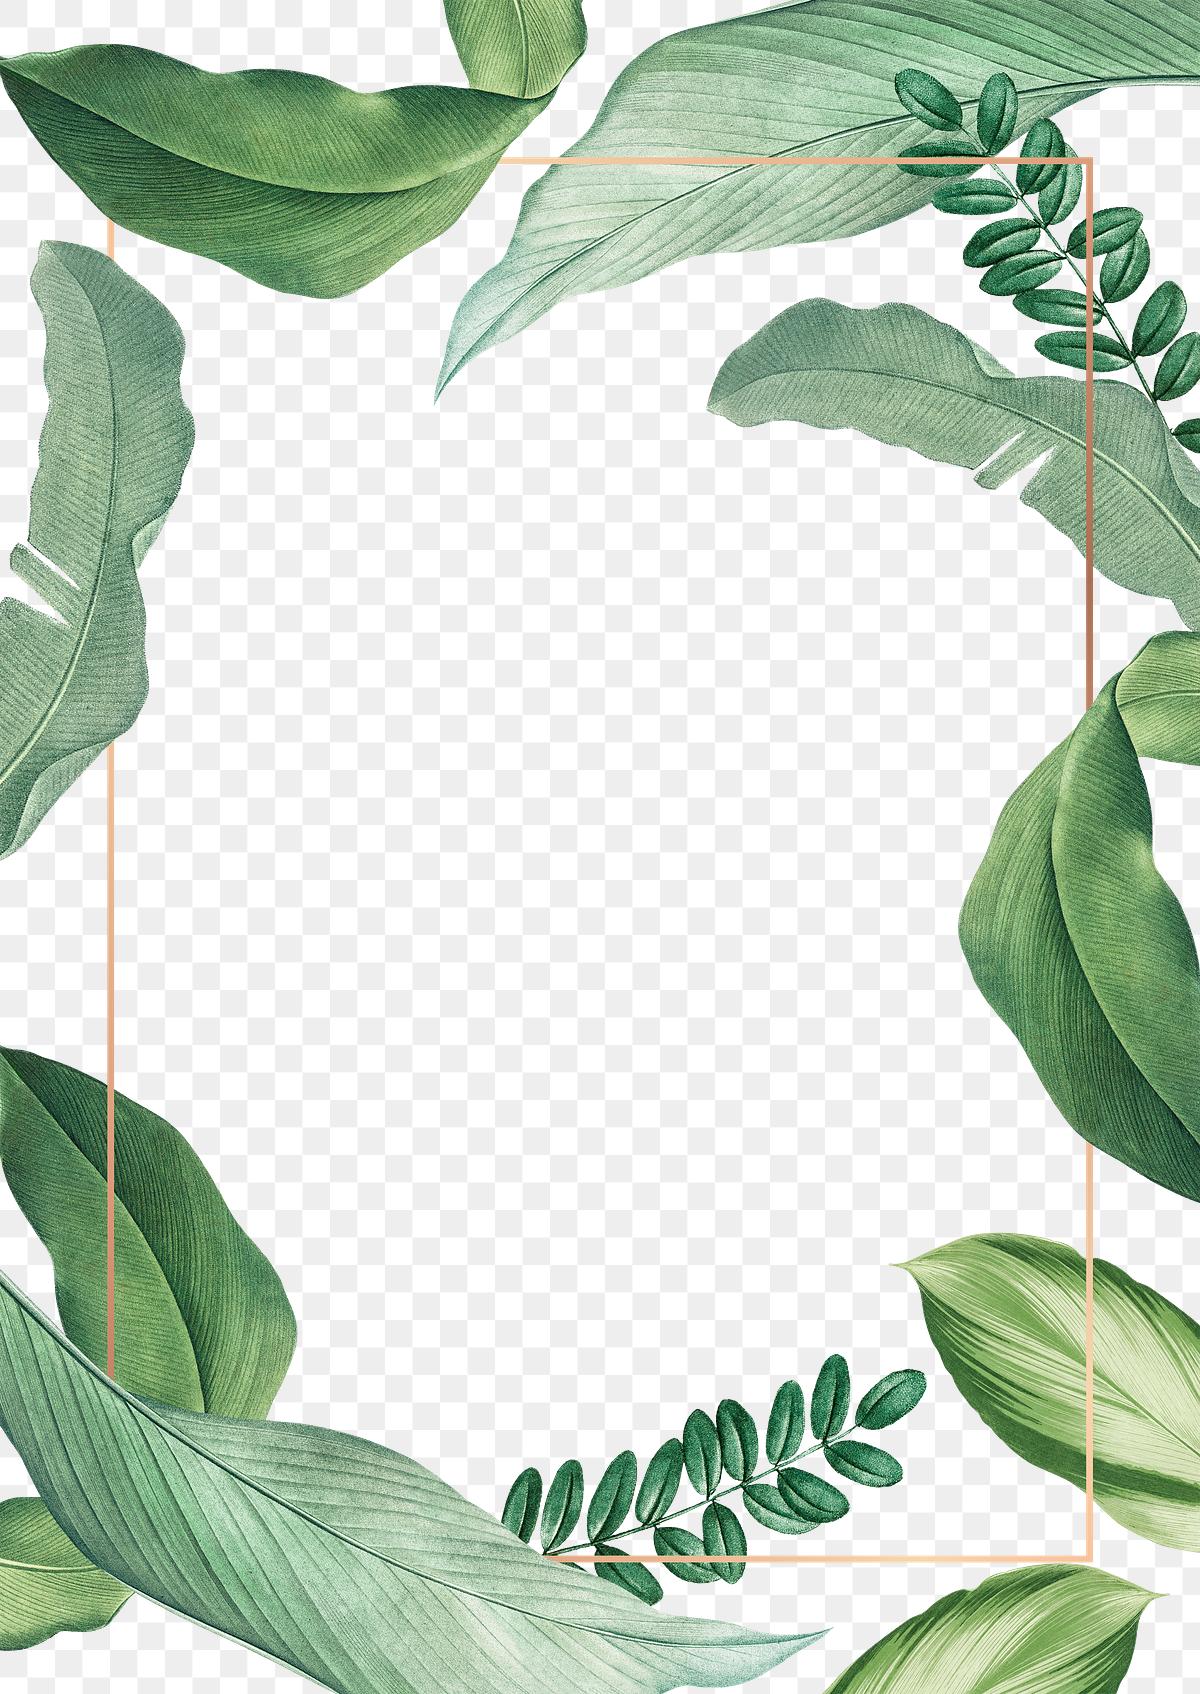 Download Tropical leaves frame | Free stock illustration - 594540